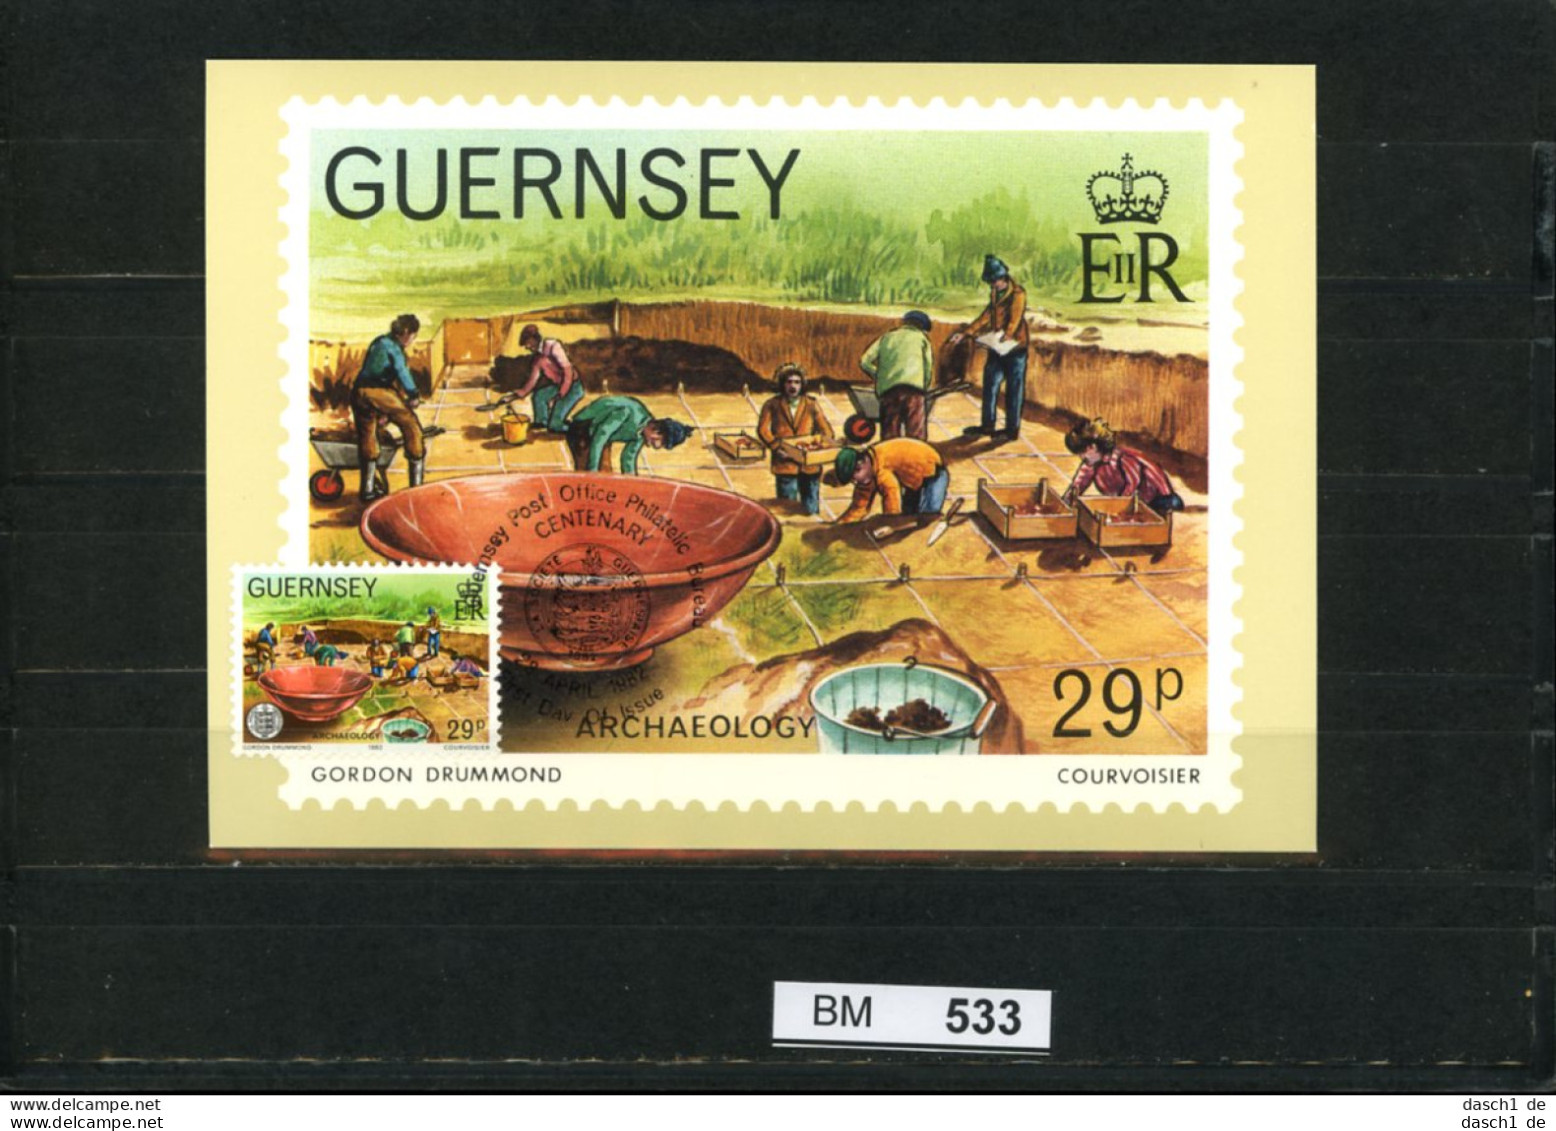 Guernsey, MC 1982 - Archäologie